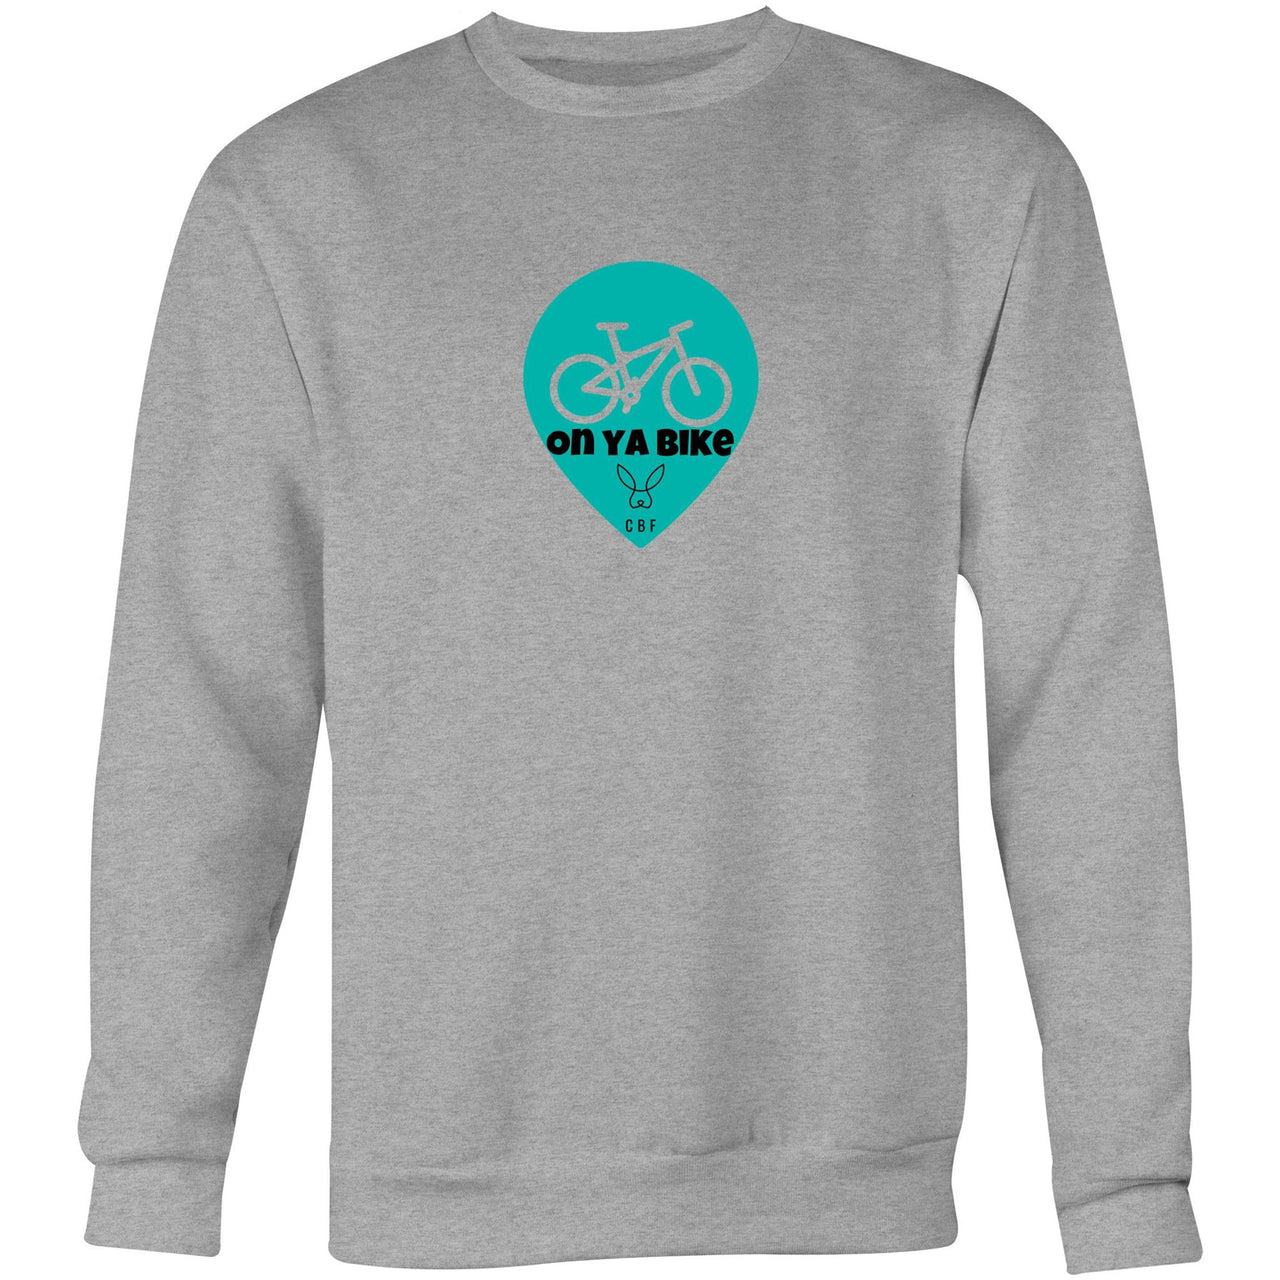 On Ya Bike Crew Sweatshirt grey marle by CBF Clothing